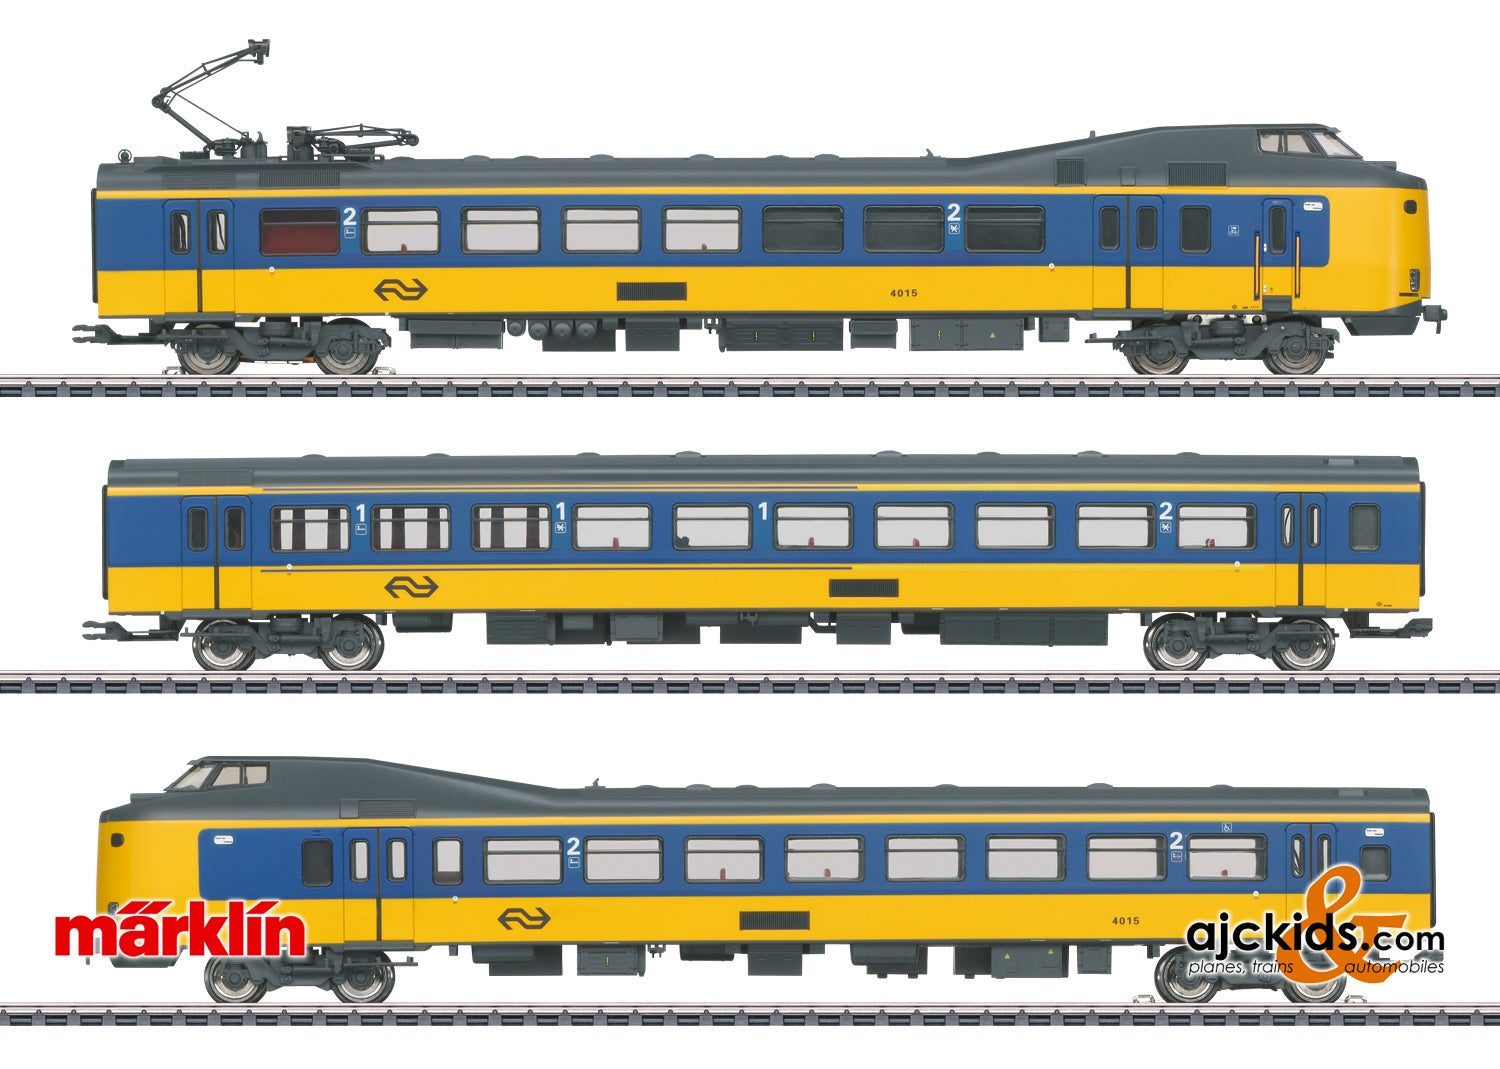 Marklin 39425 - Class ICM-1 "Koploper" Electric Rail Car Train